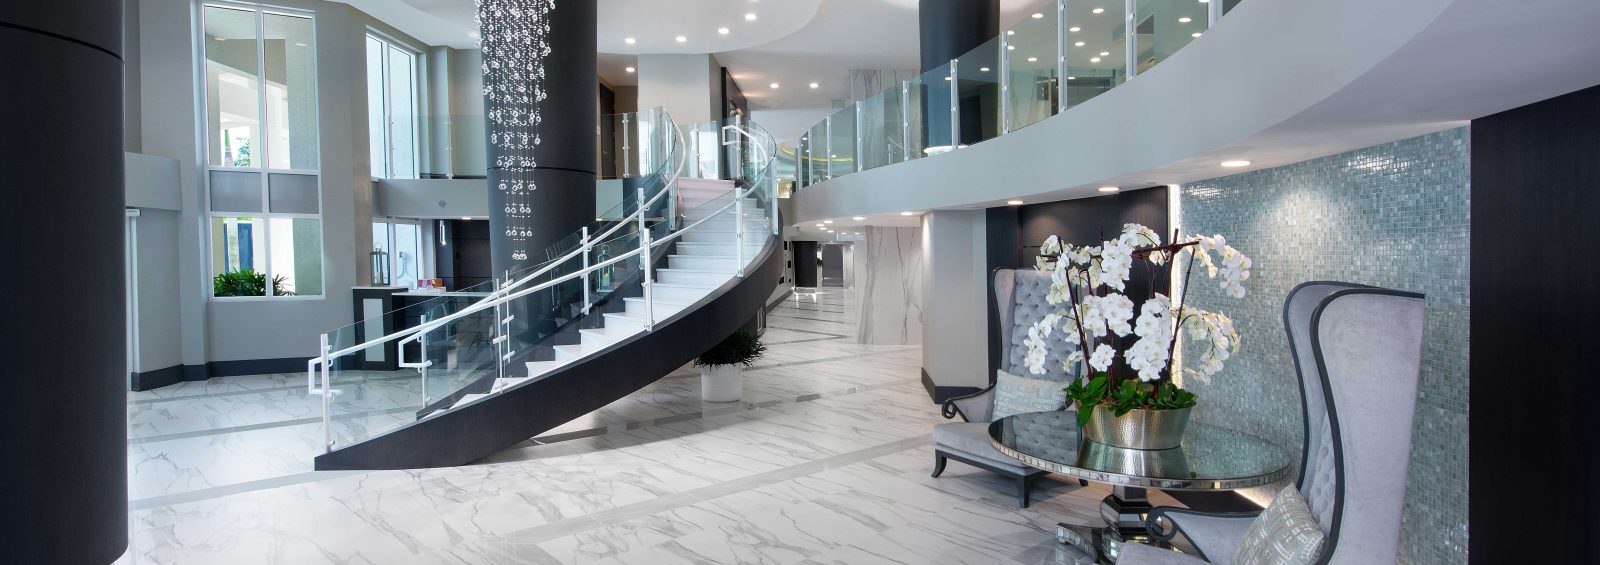 Seaglass-Lobby-Staircase-2-web-scaled-aspect-ratio-2550-900